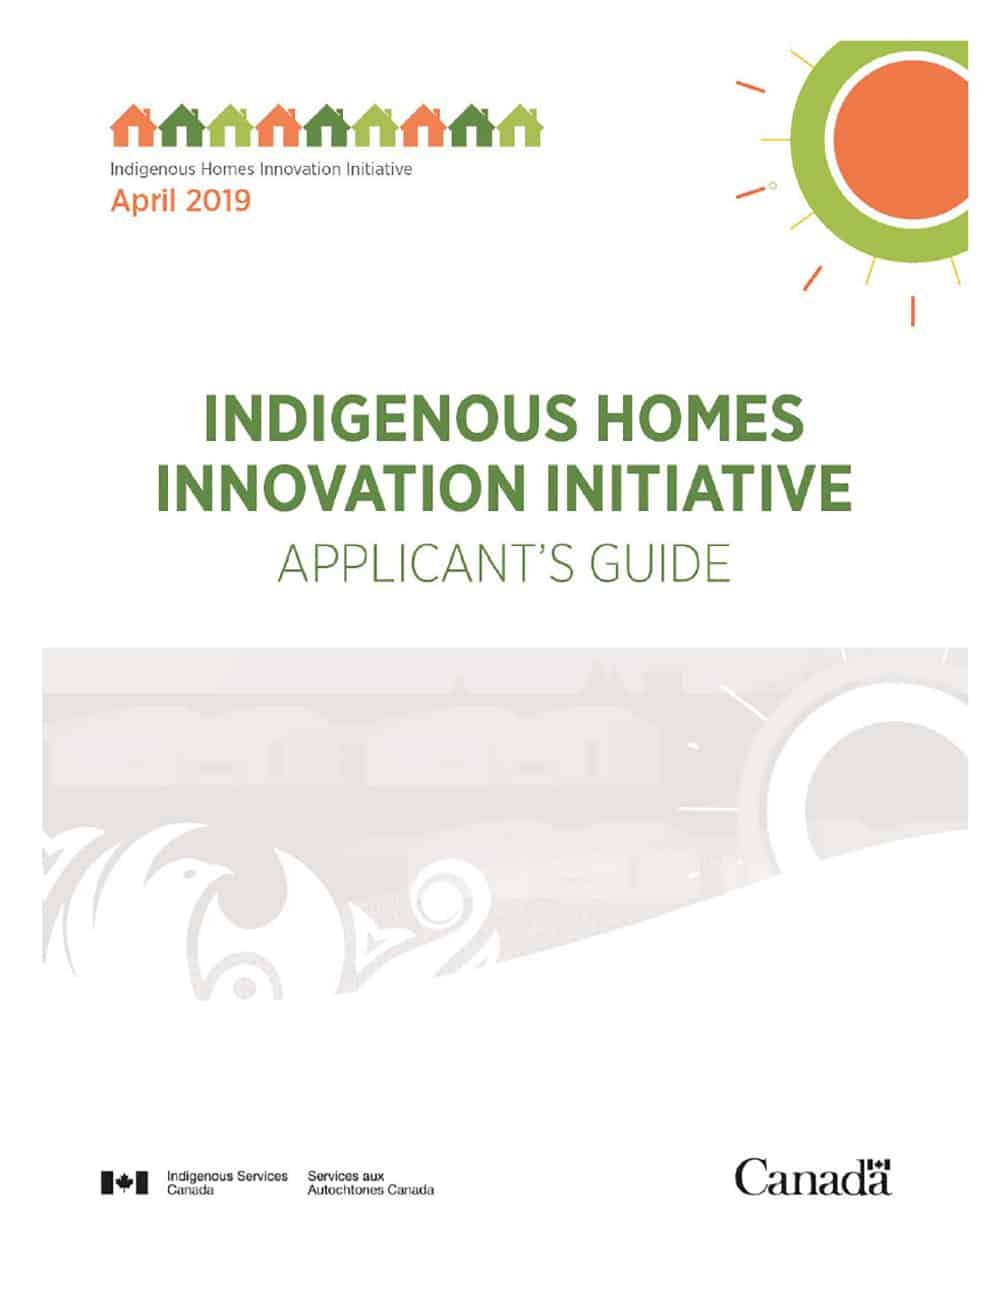 CA_2019_IndigenousHomesInnovationInitiative.jpg